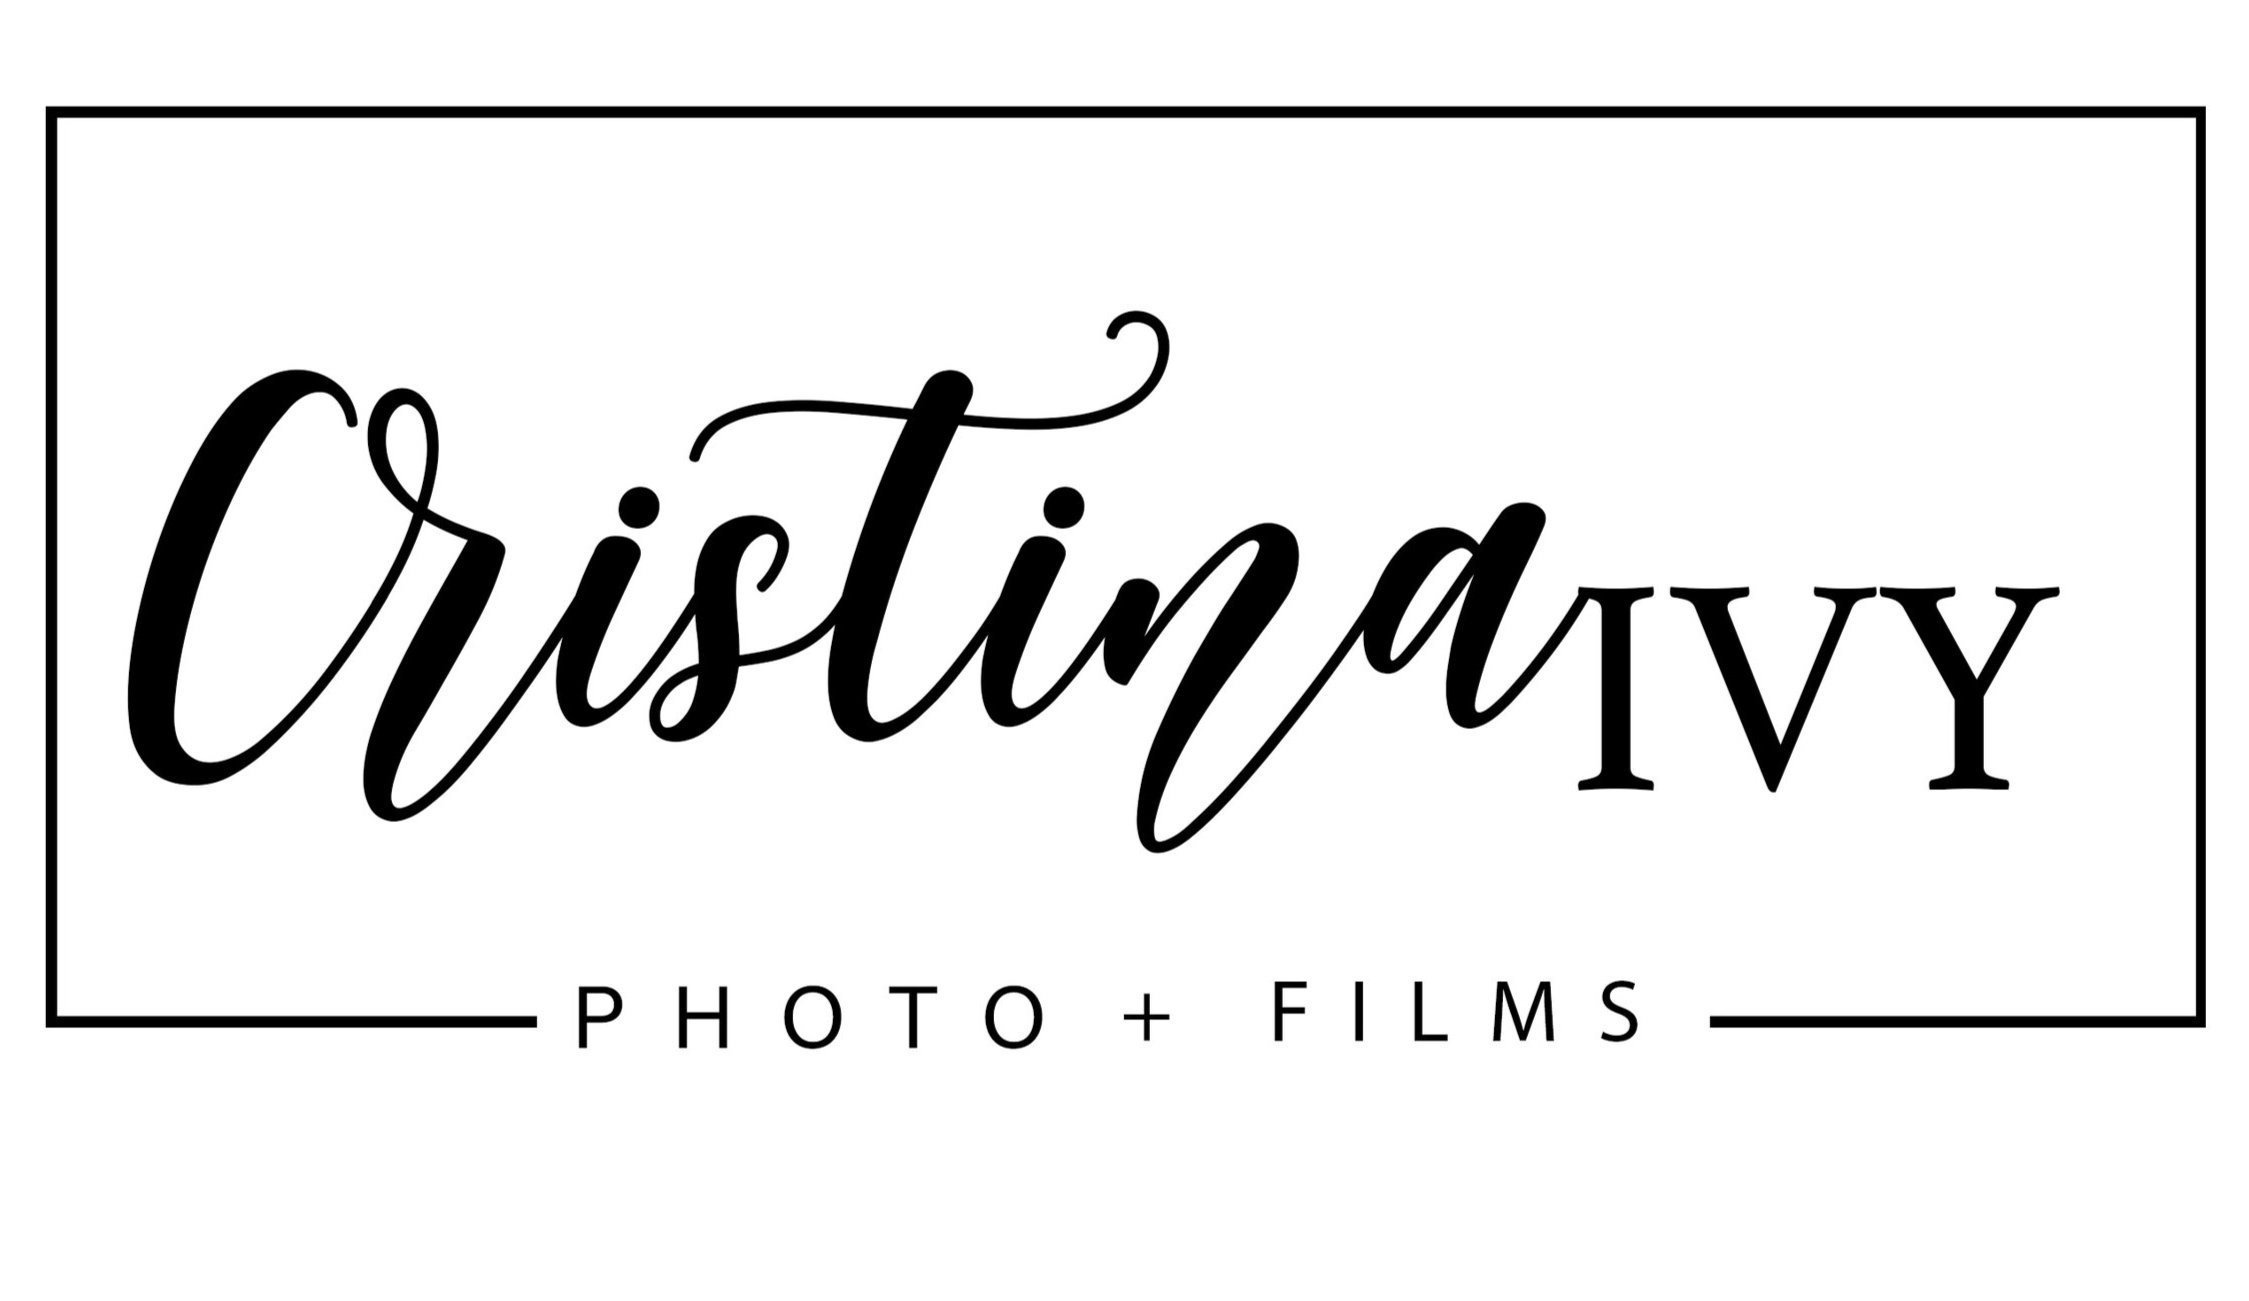 Cristina Ivy Photo + Films